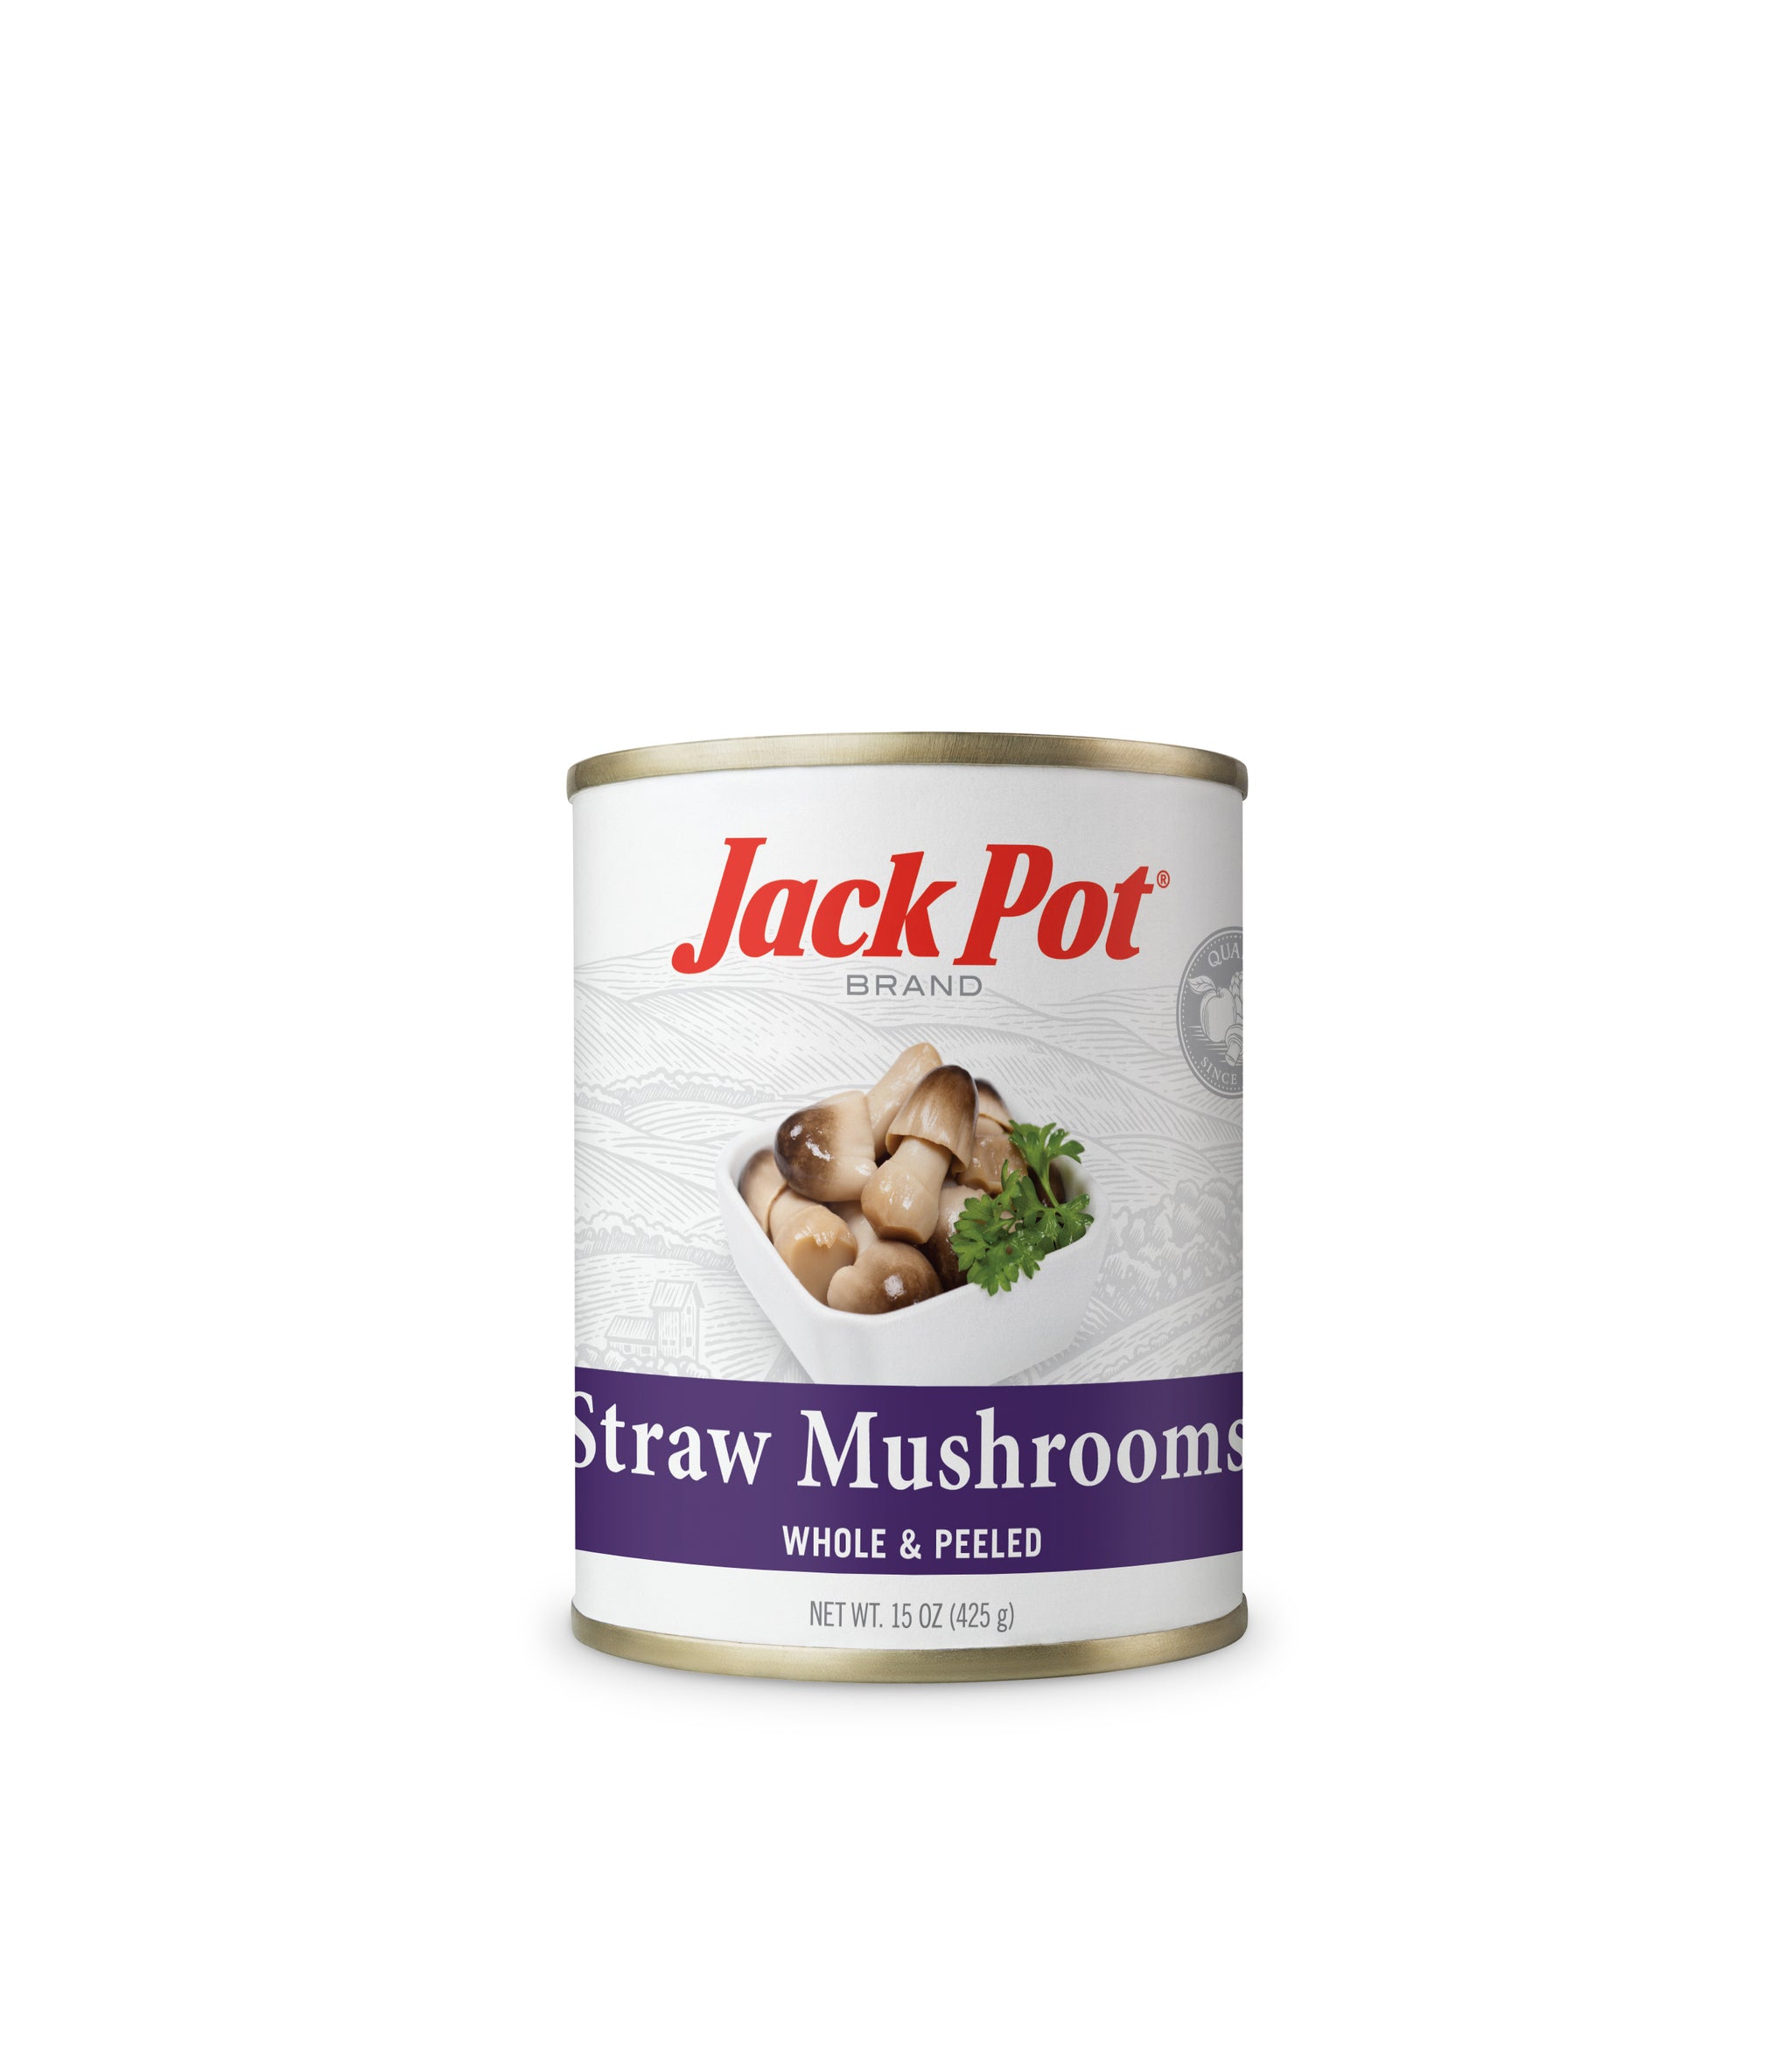 Straw Mushrooms 425 g